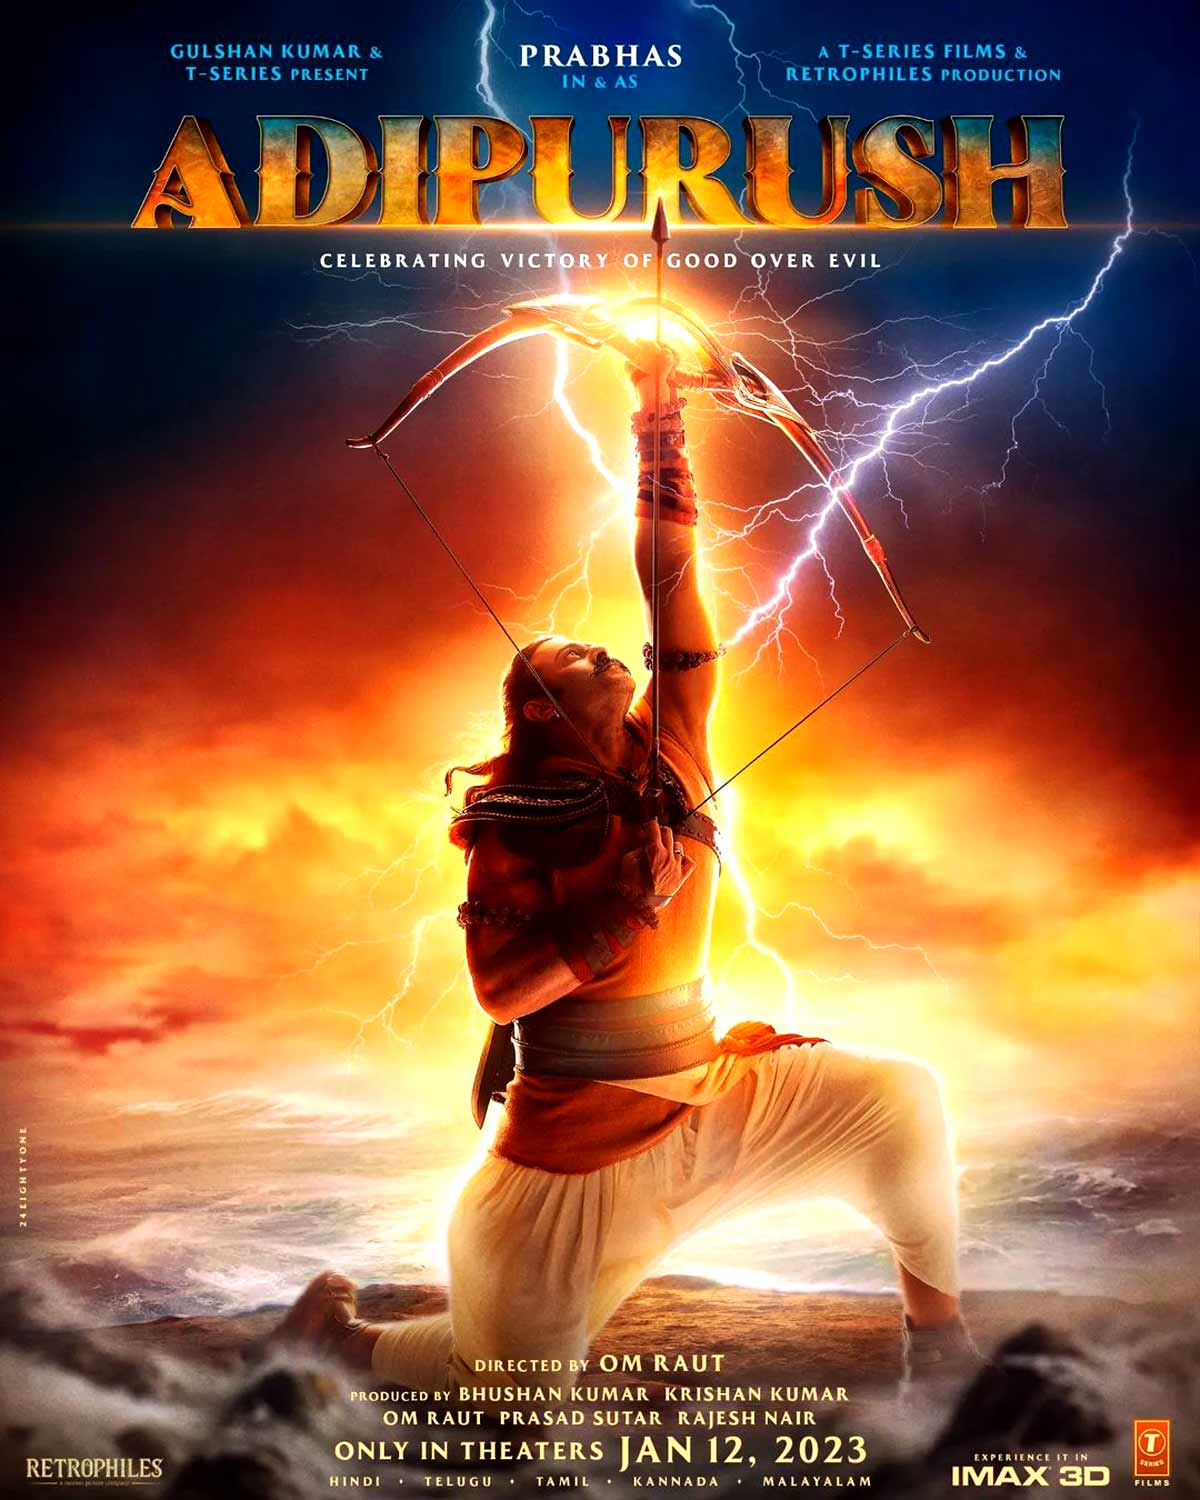 Like Prabhas' Look in Adipurush?